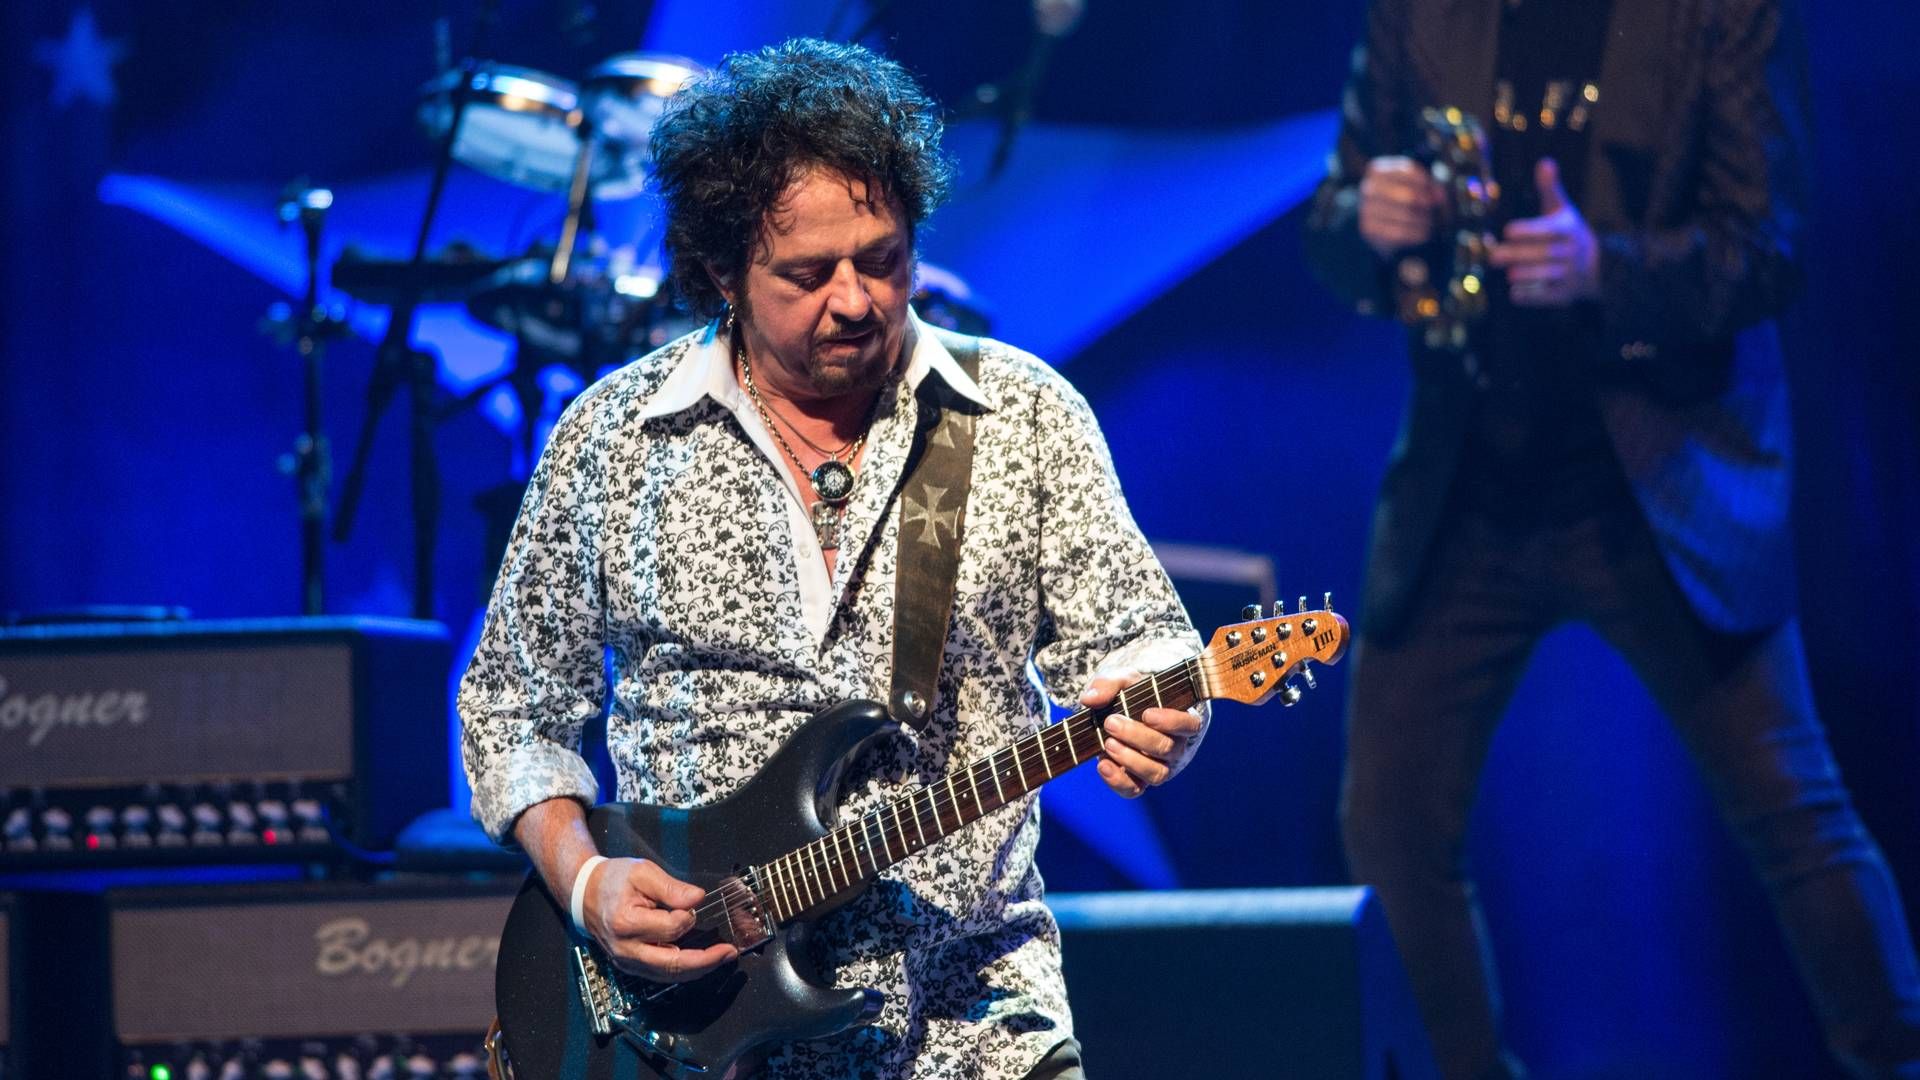 Toto guitarist Steve Lukather is open about his hearing aids. | Photo: Amy Harris/AP/Ritzau Scanpix